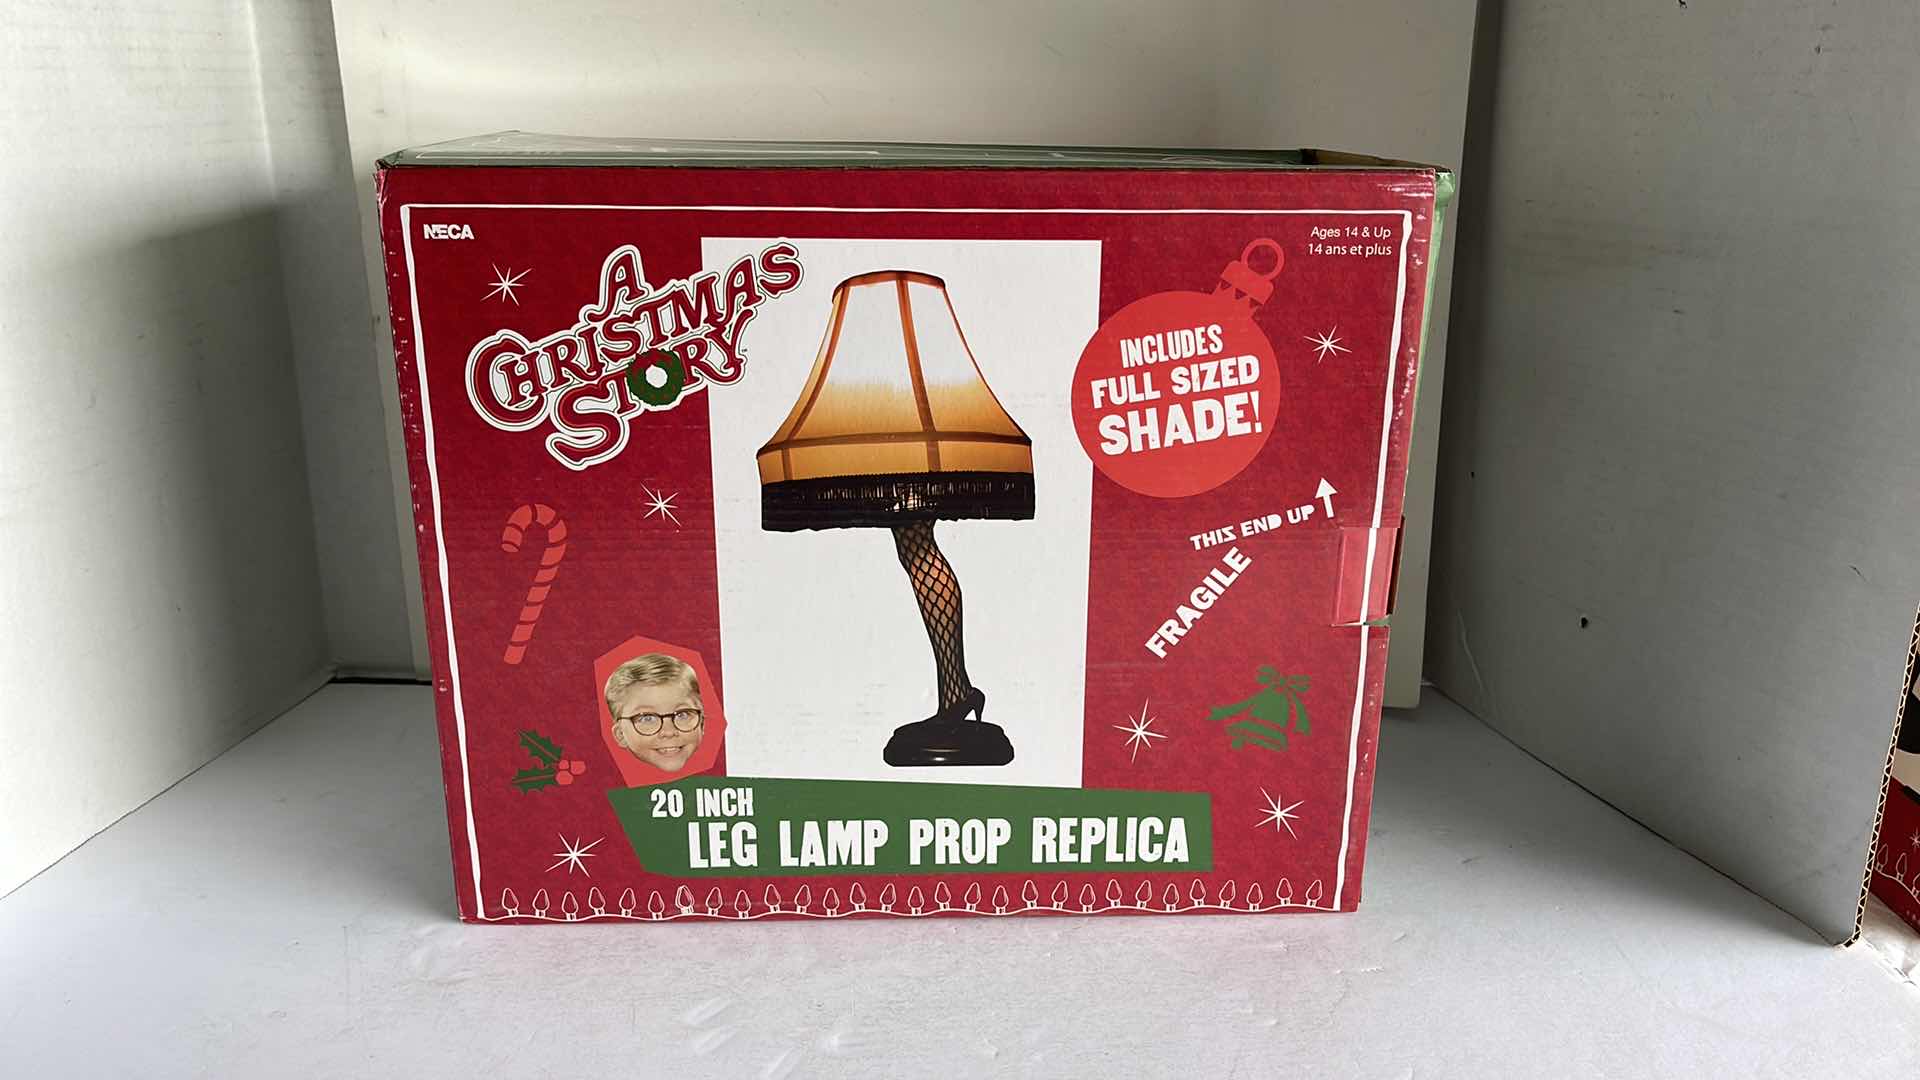 Photo 3 of NIB A CHRISTMAS STORY 20 INCH LEG LAMP PROP REPLICA MSRP $44.99